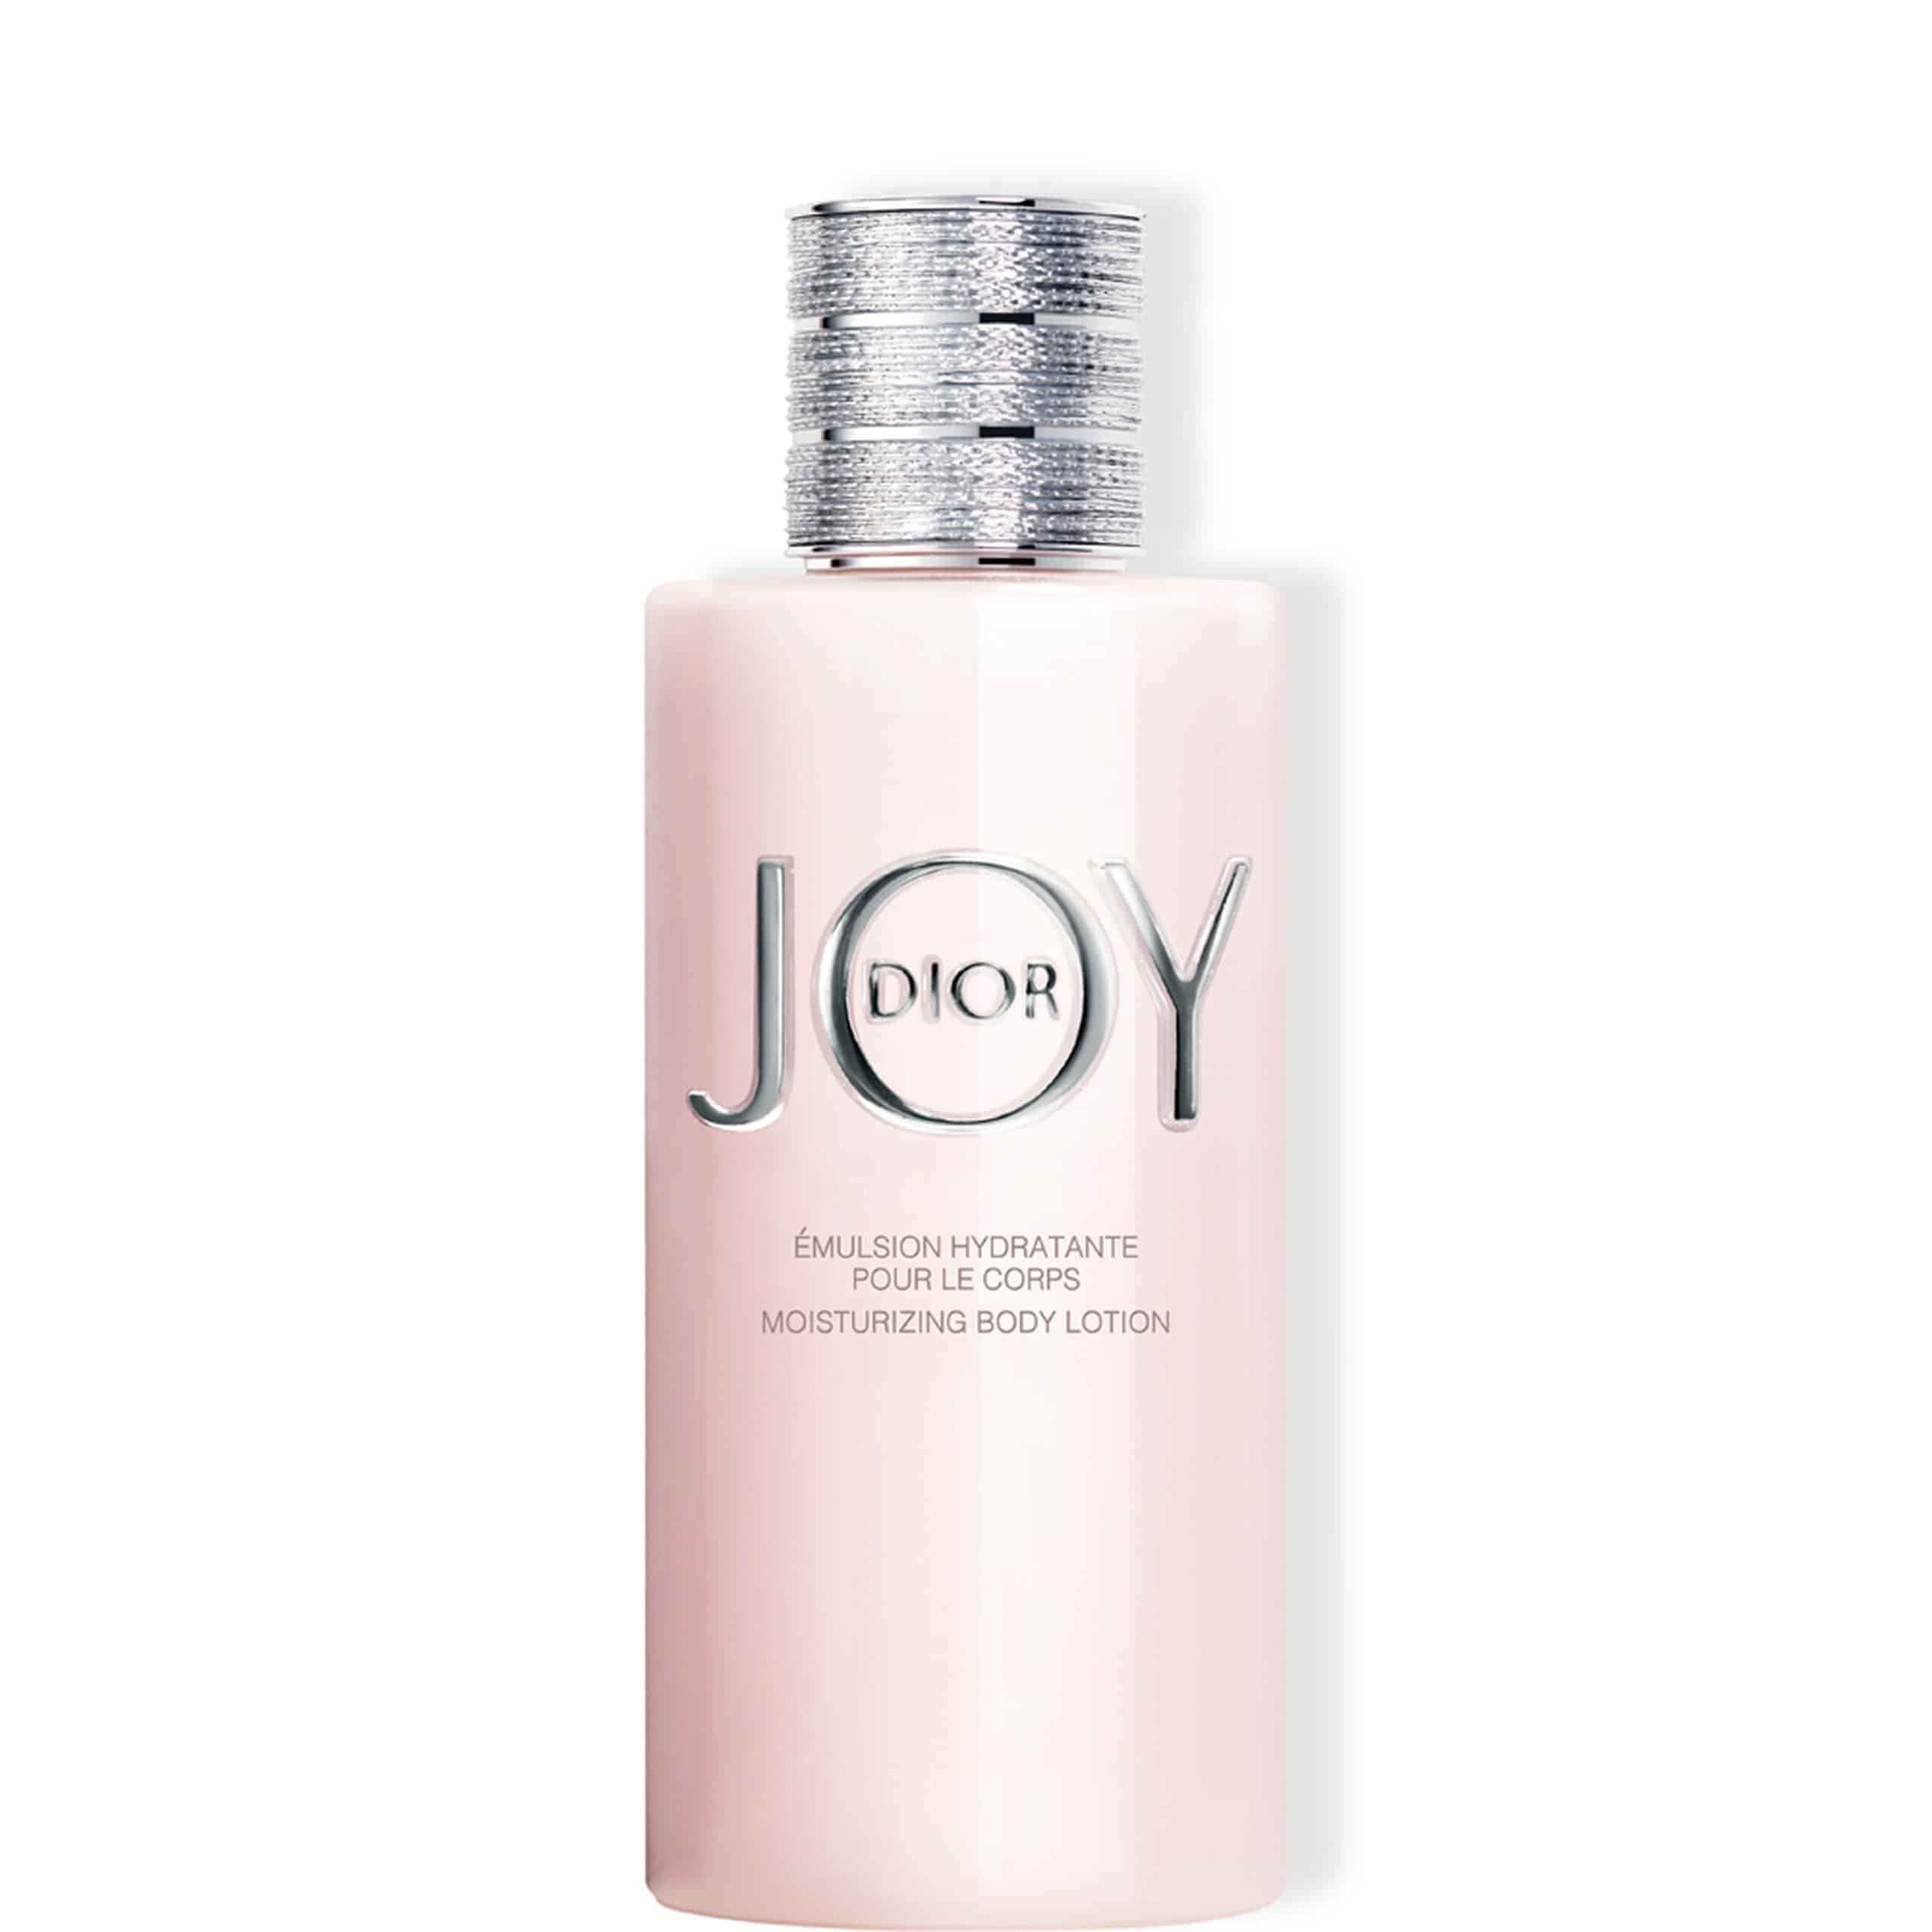 Dior Joy moisturizing